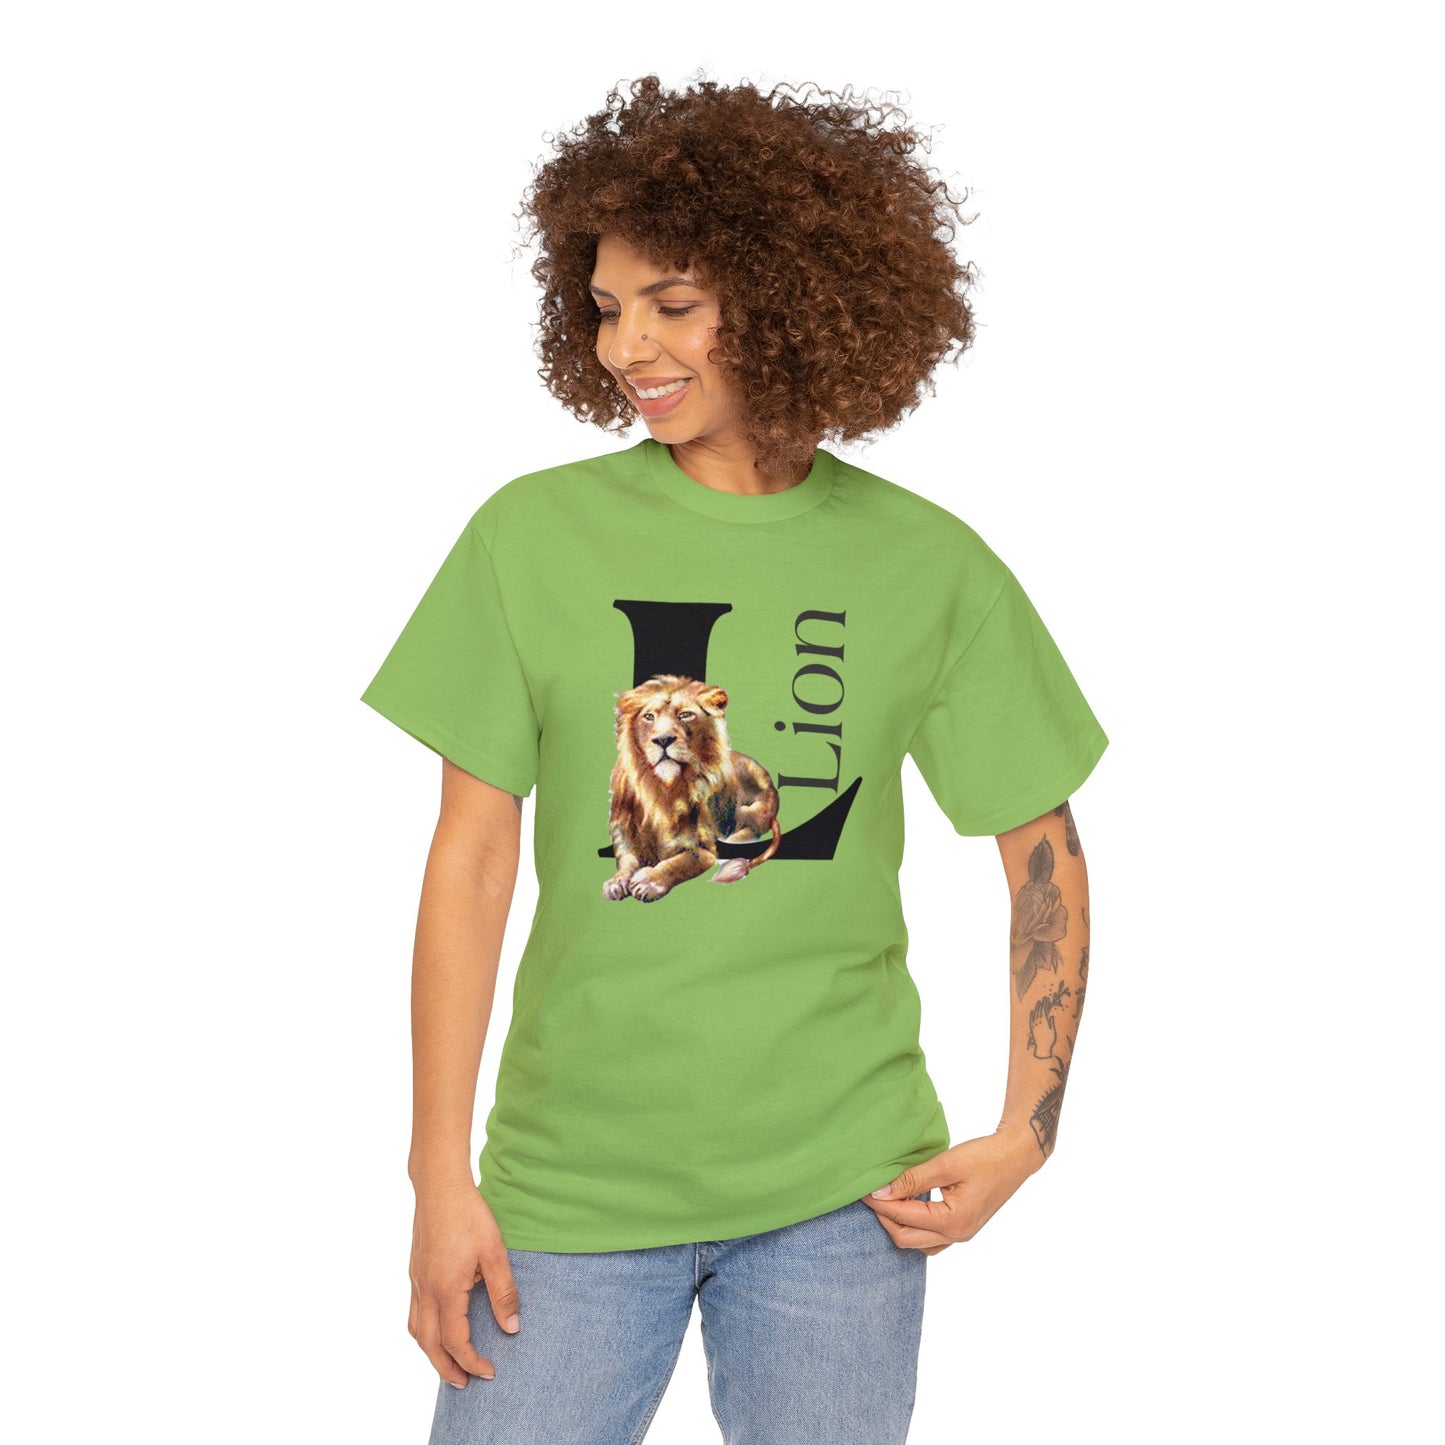 L is for Lion T-Shirt, Lion Drawing T-Shirt, Illustration of Lion, Proud Lion animal t-shirt